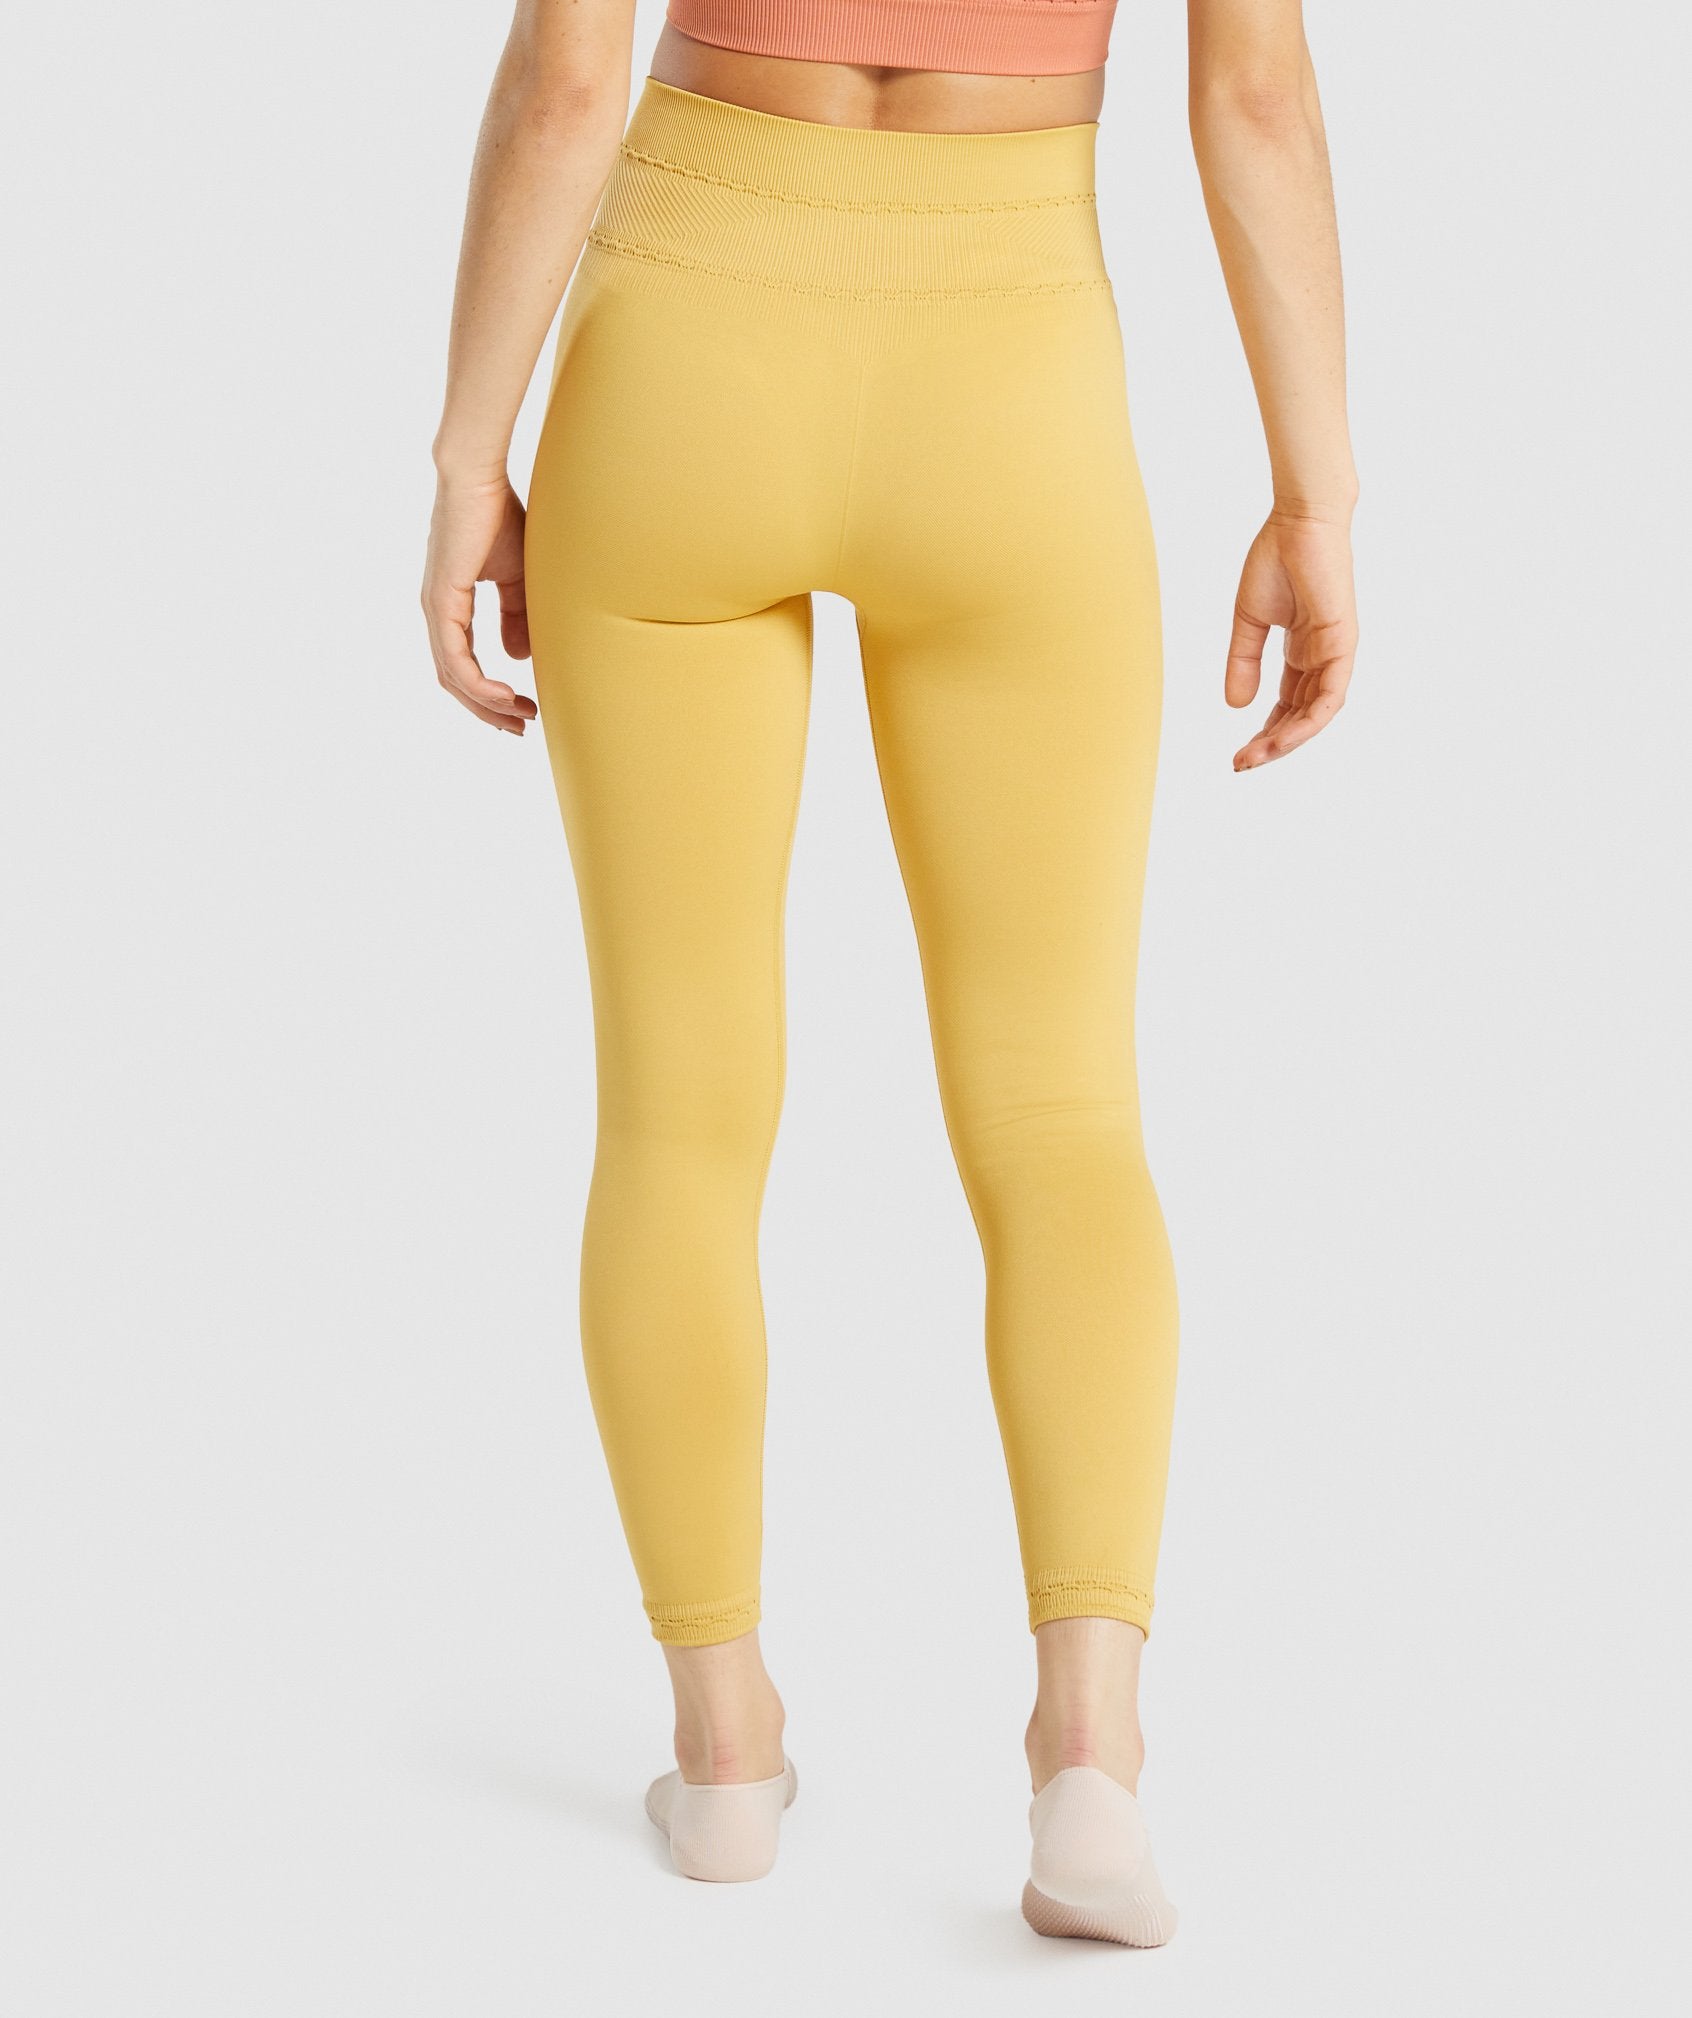 Colorfulkoala Yellow High Waisted Leggings Size XS - $18 - From